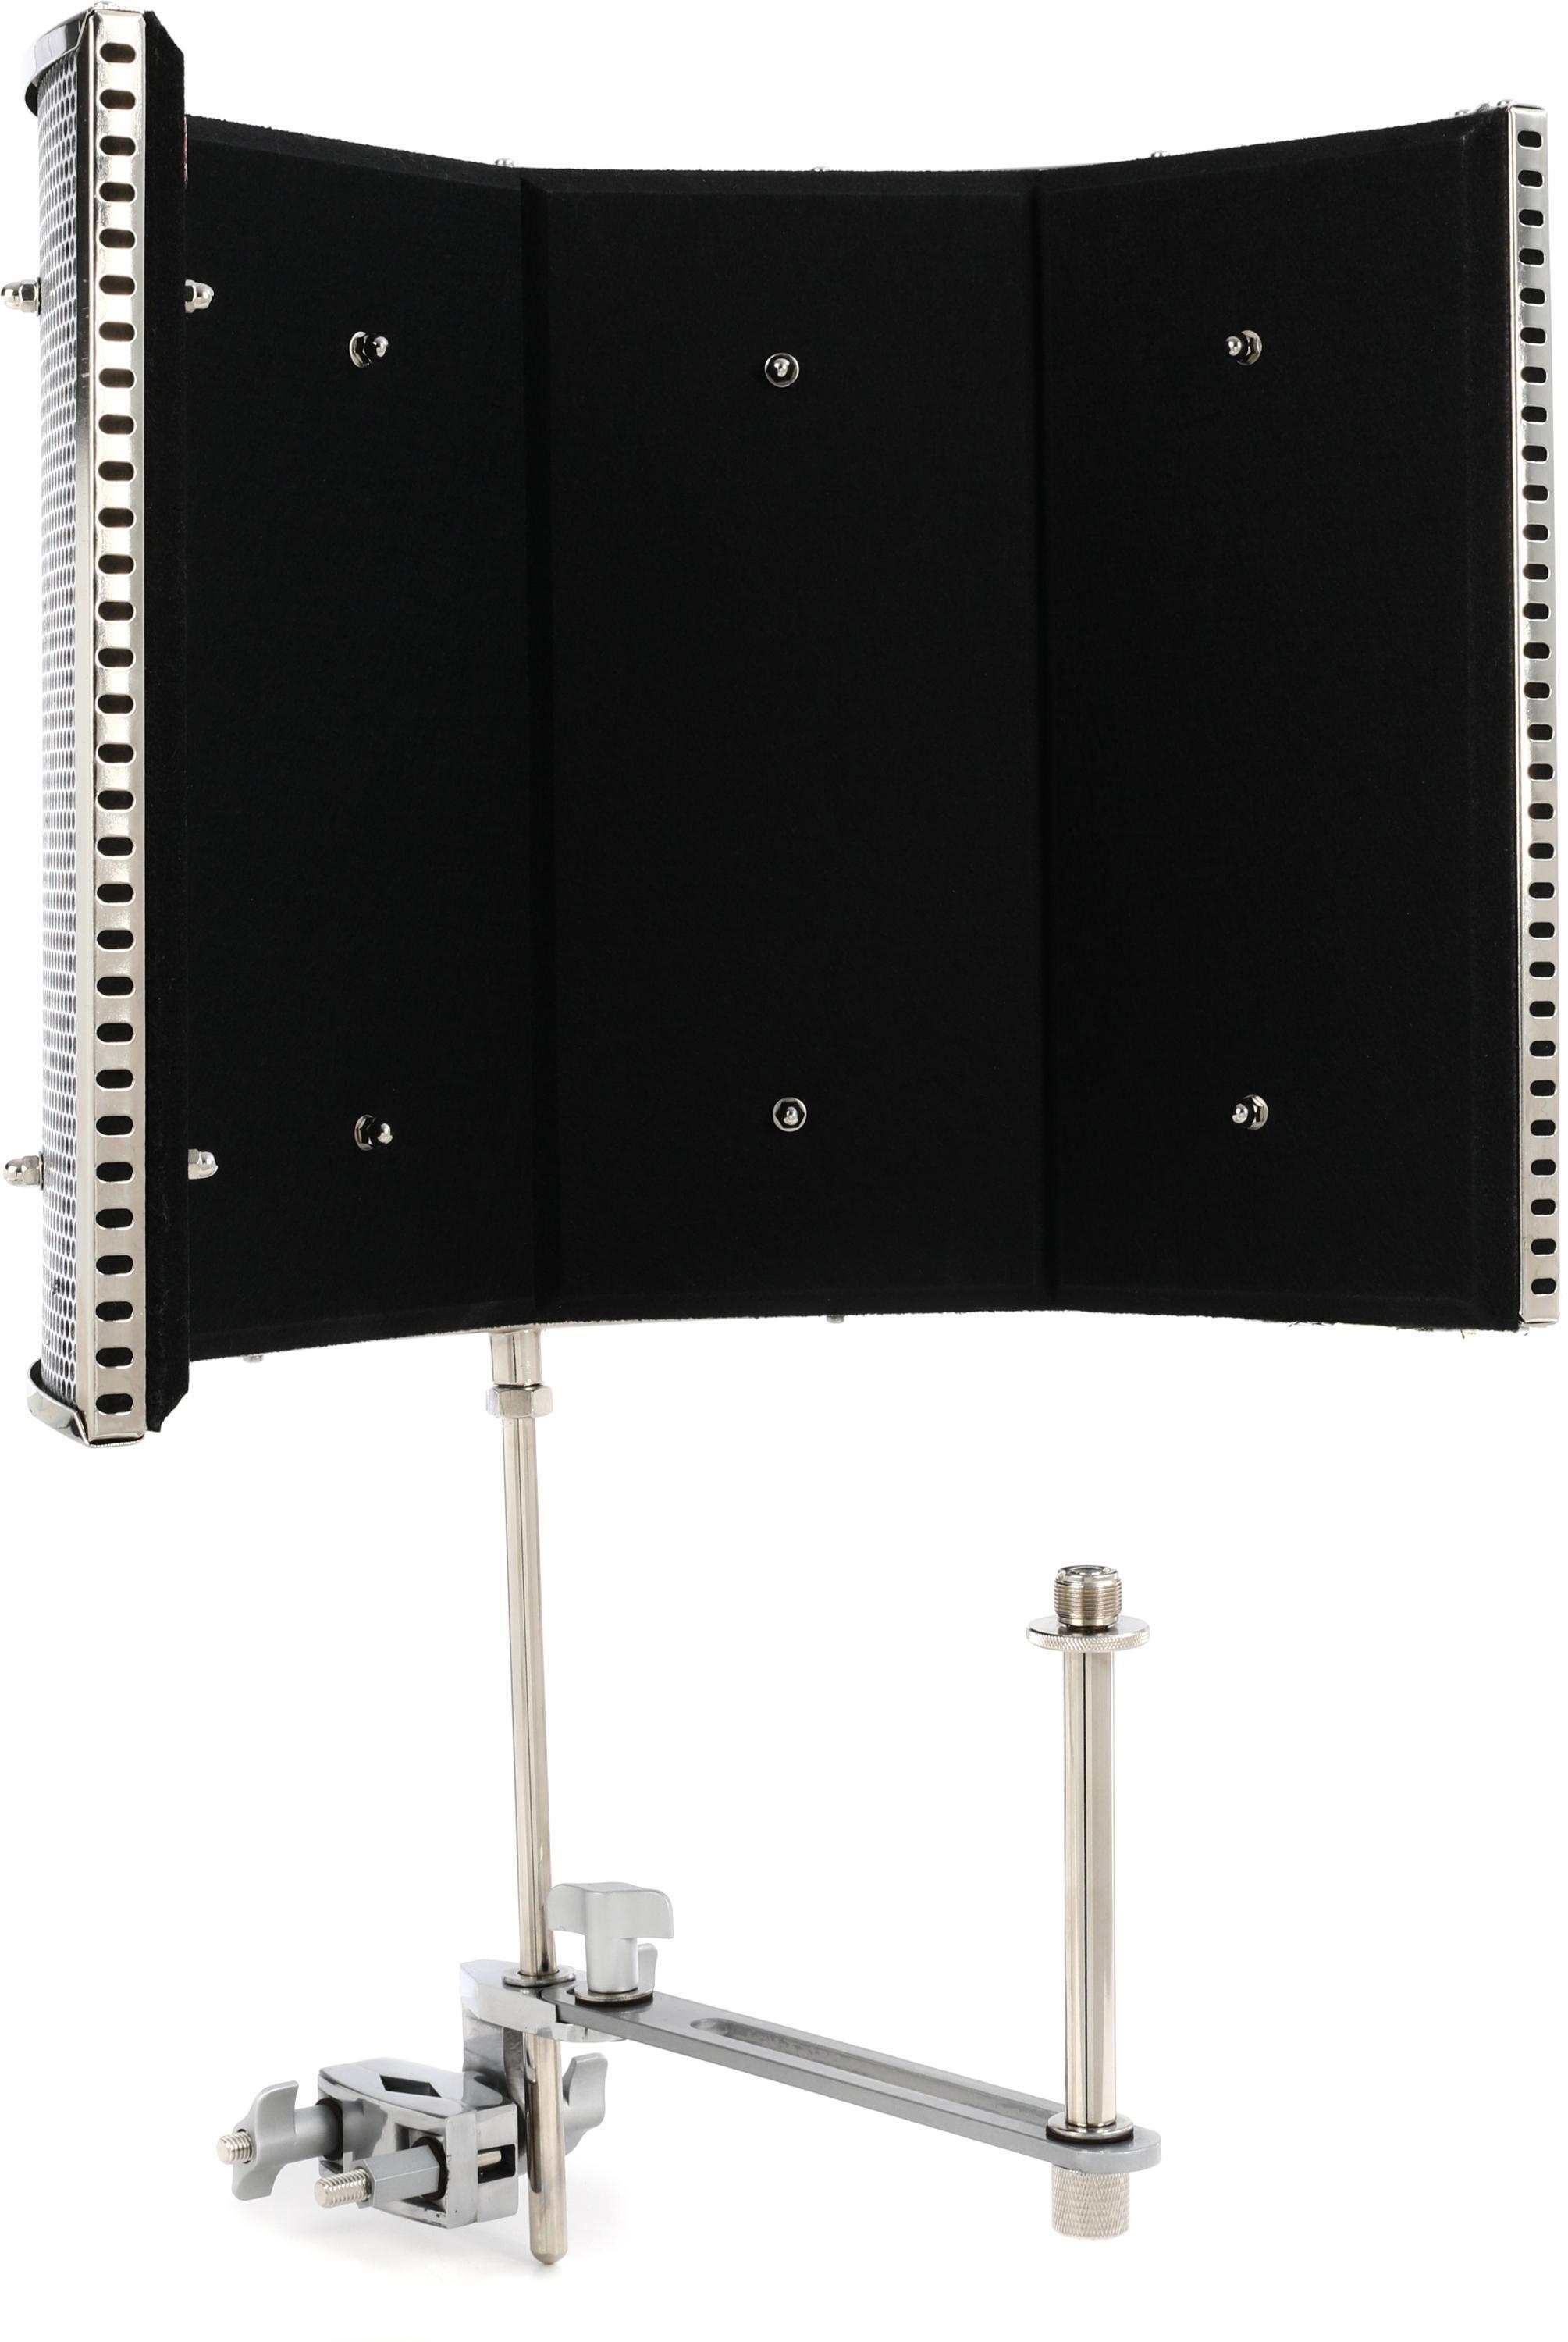 Bundled Item: sE Electronics Reflexion Filter PRO Portable Vocal Booth